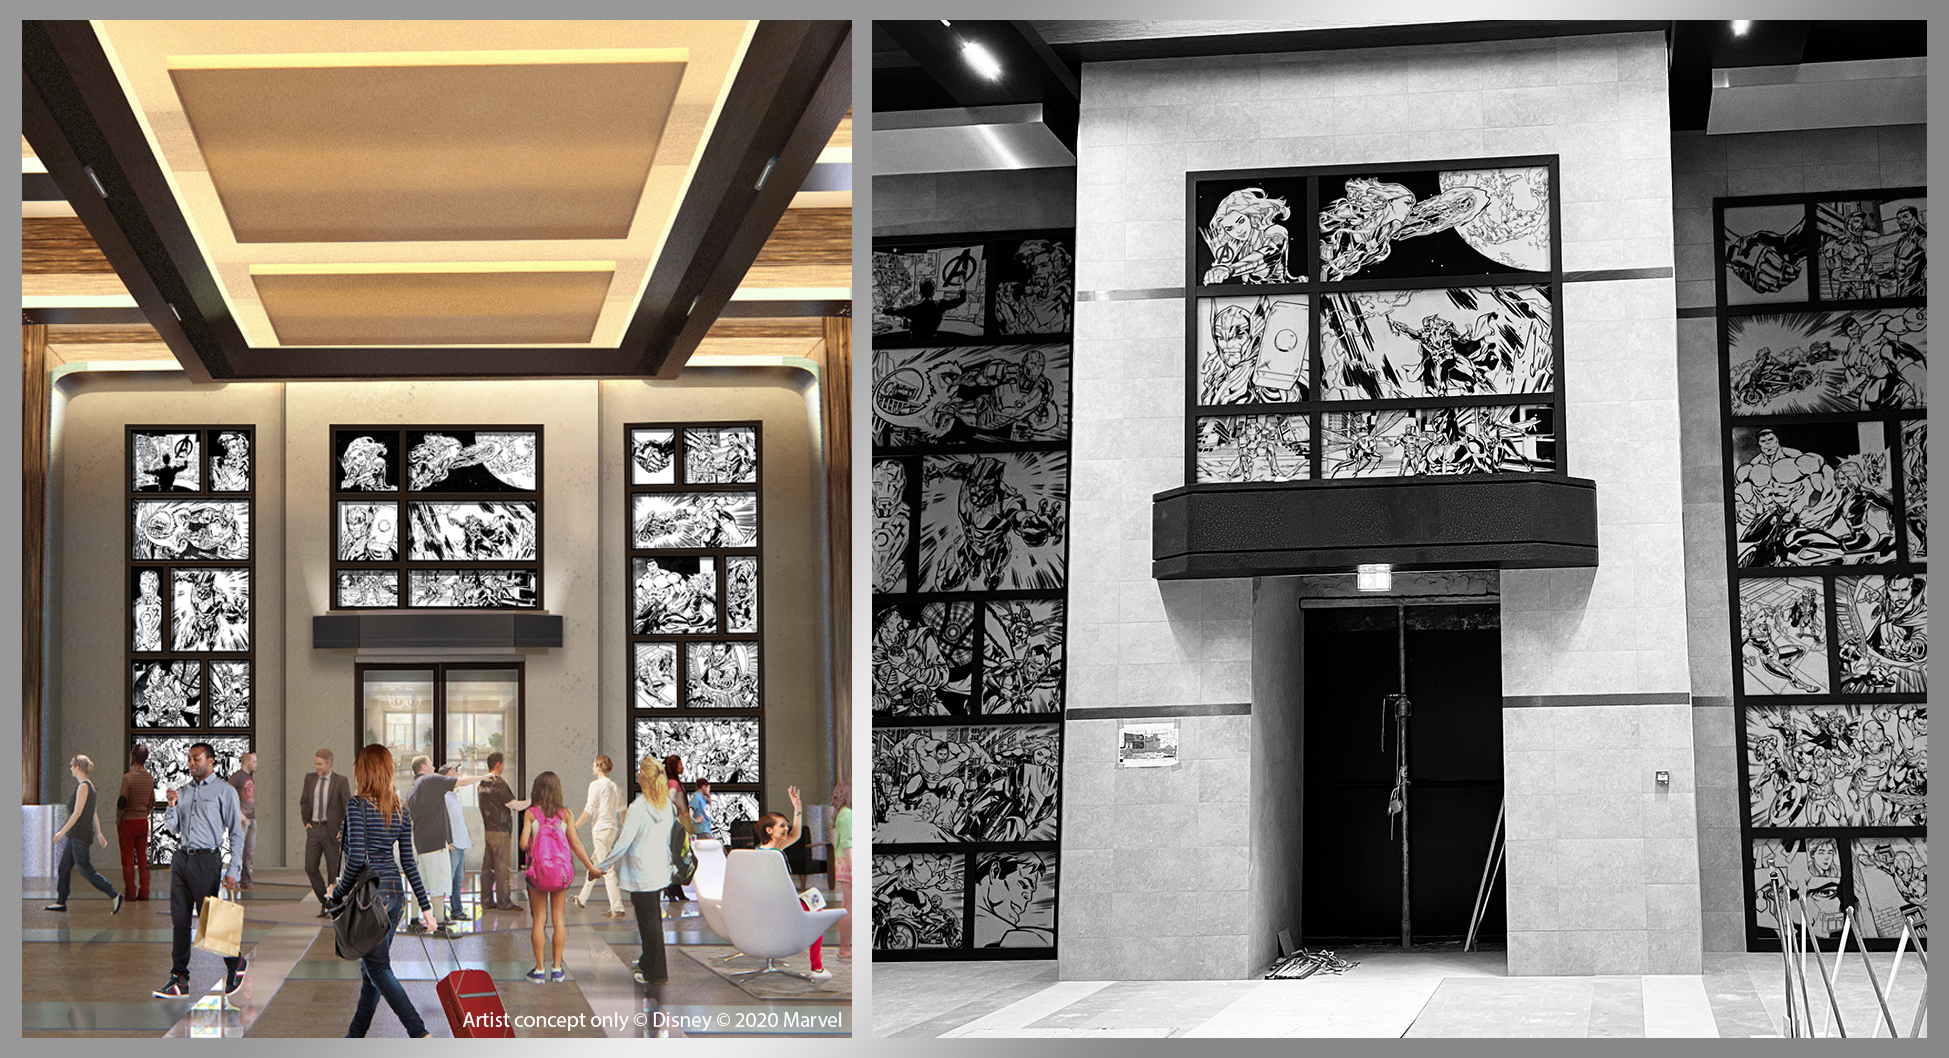 Le lobby du futur hôtel Disney’s Hotel New York – The Art of Marvel, à Disneyland Paris 